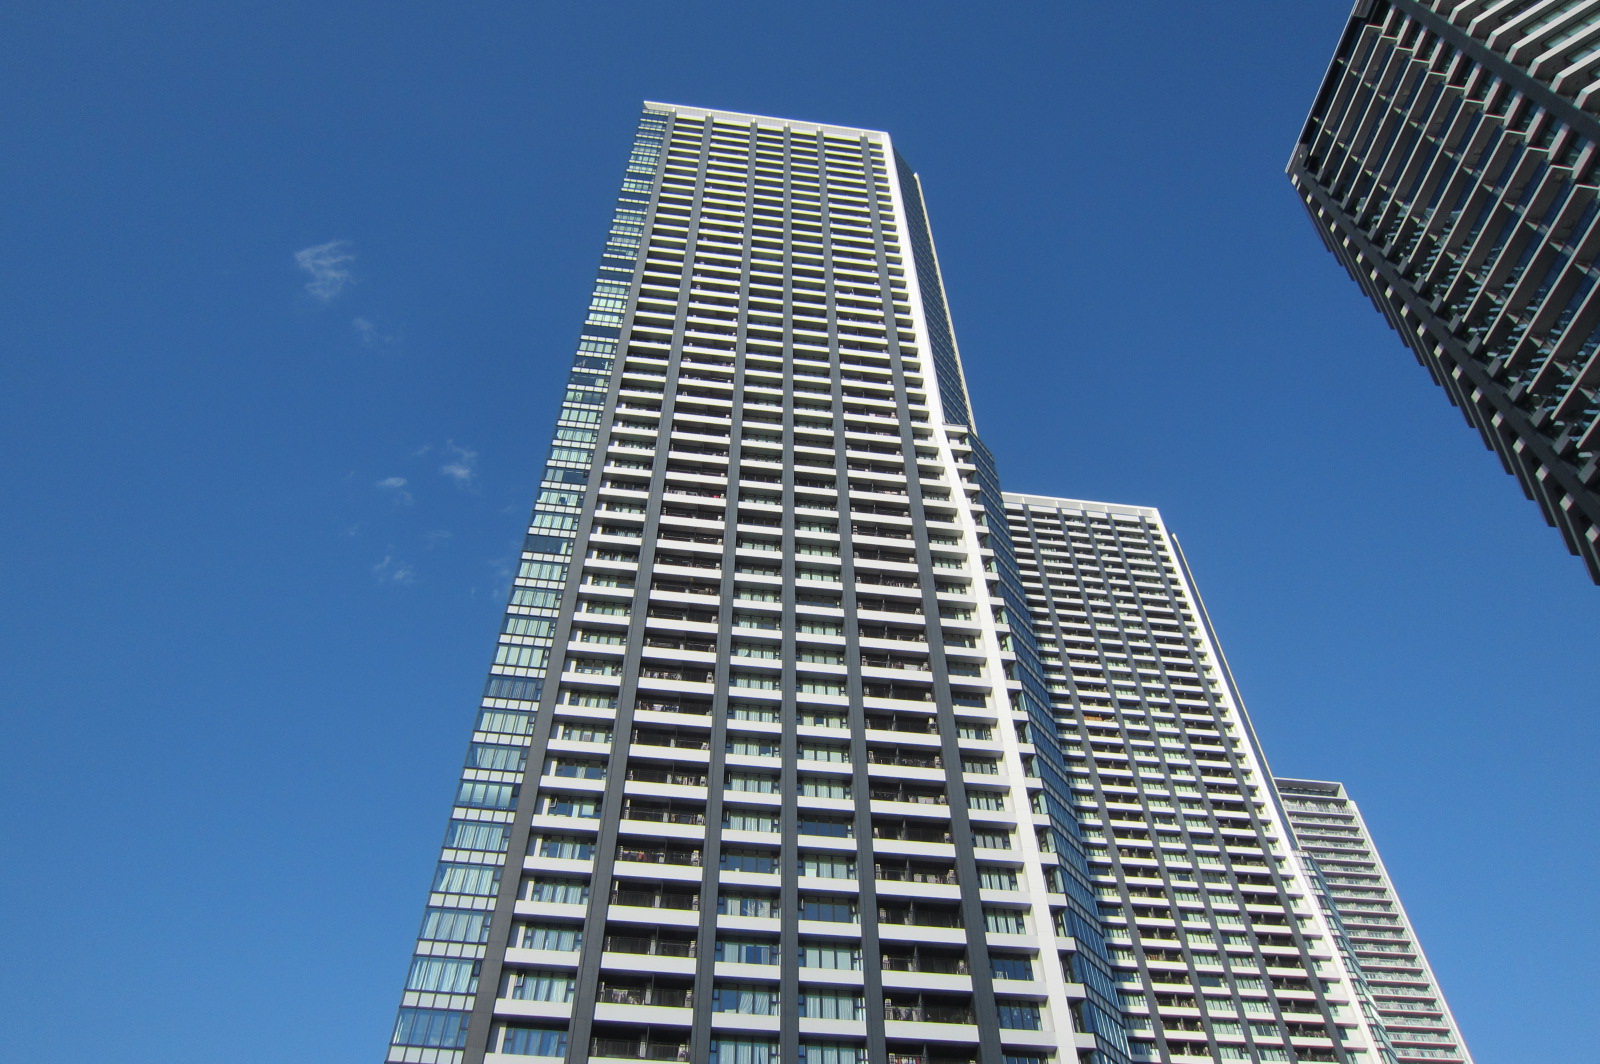 2sldk Mansion For Rent In Harumi Chuo Ku Tokyo Gaijinpot Apartments